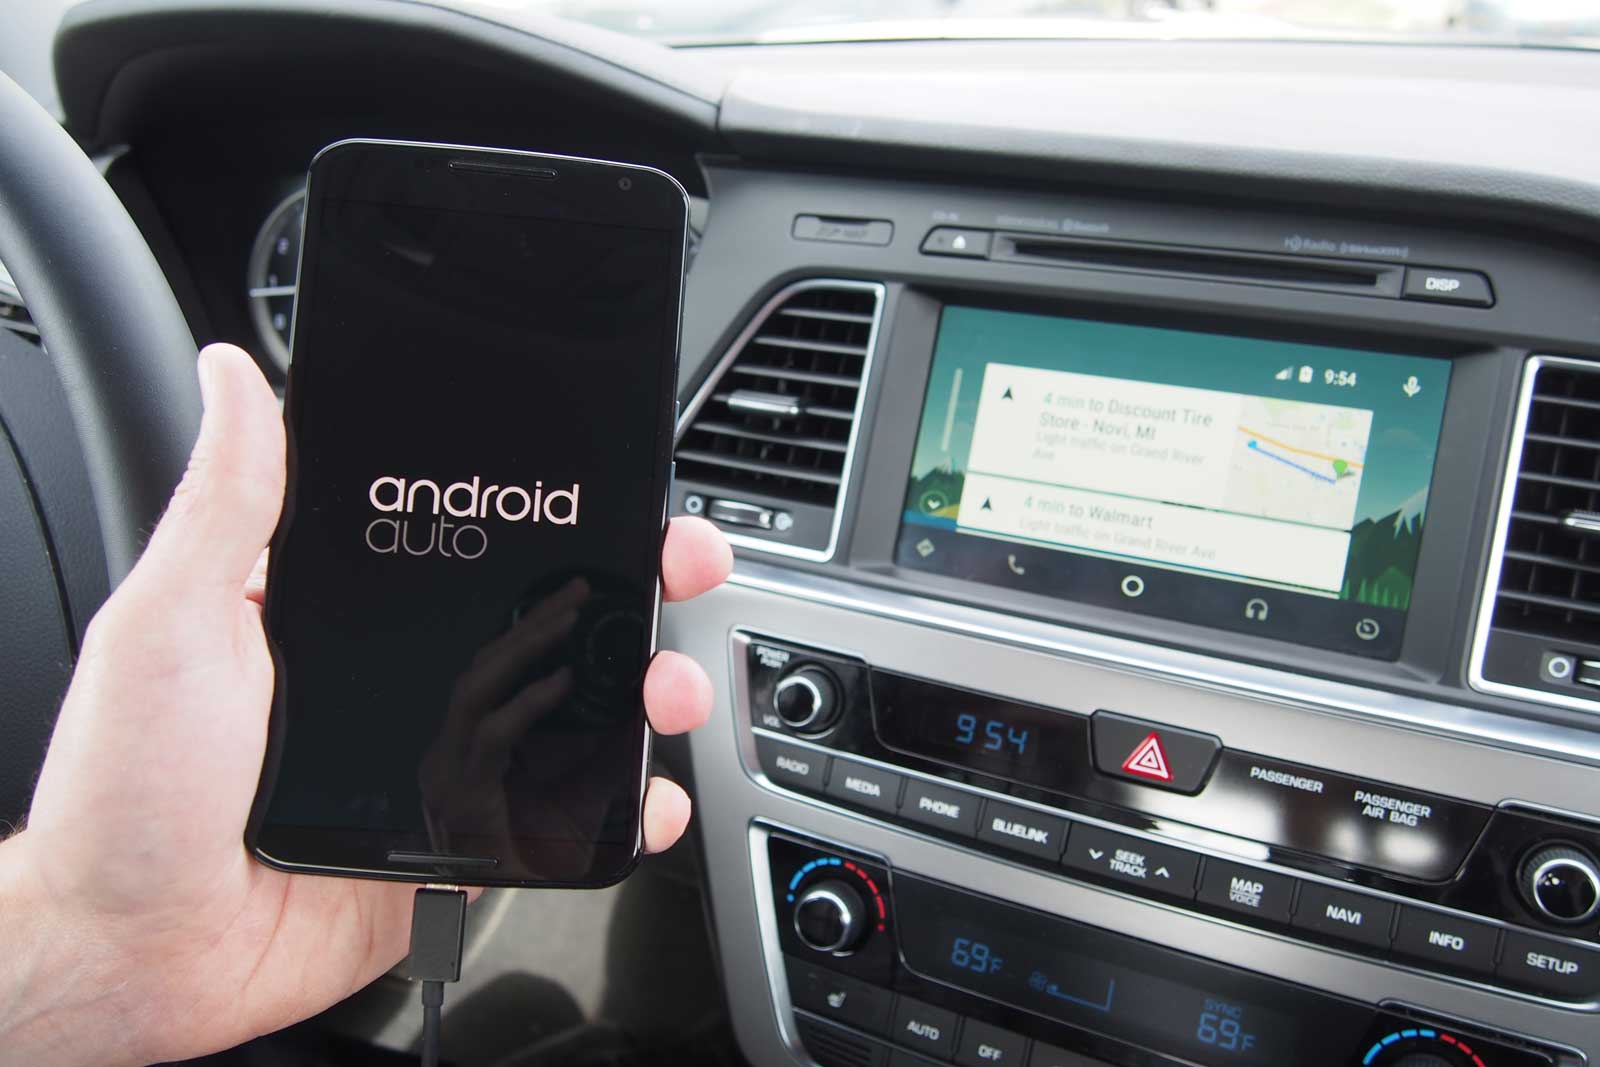 Видео приложения андроид авто. Android auto. Андроид в машину. Андроид для автомобиля. Android auto приложение.